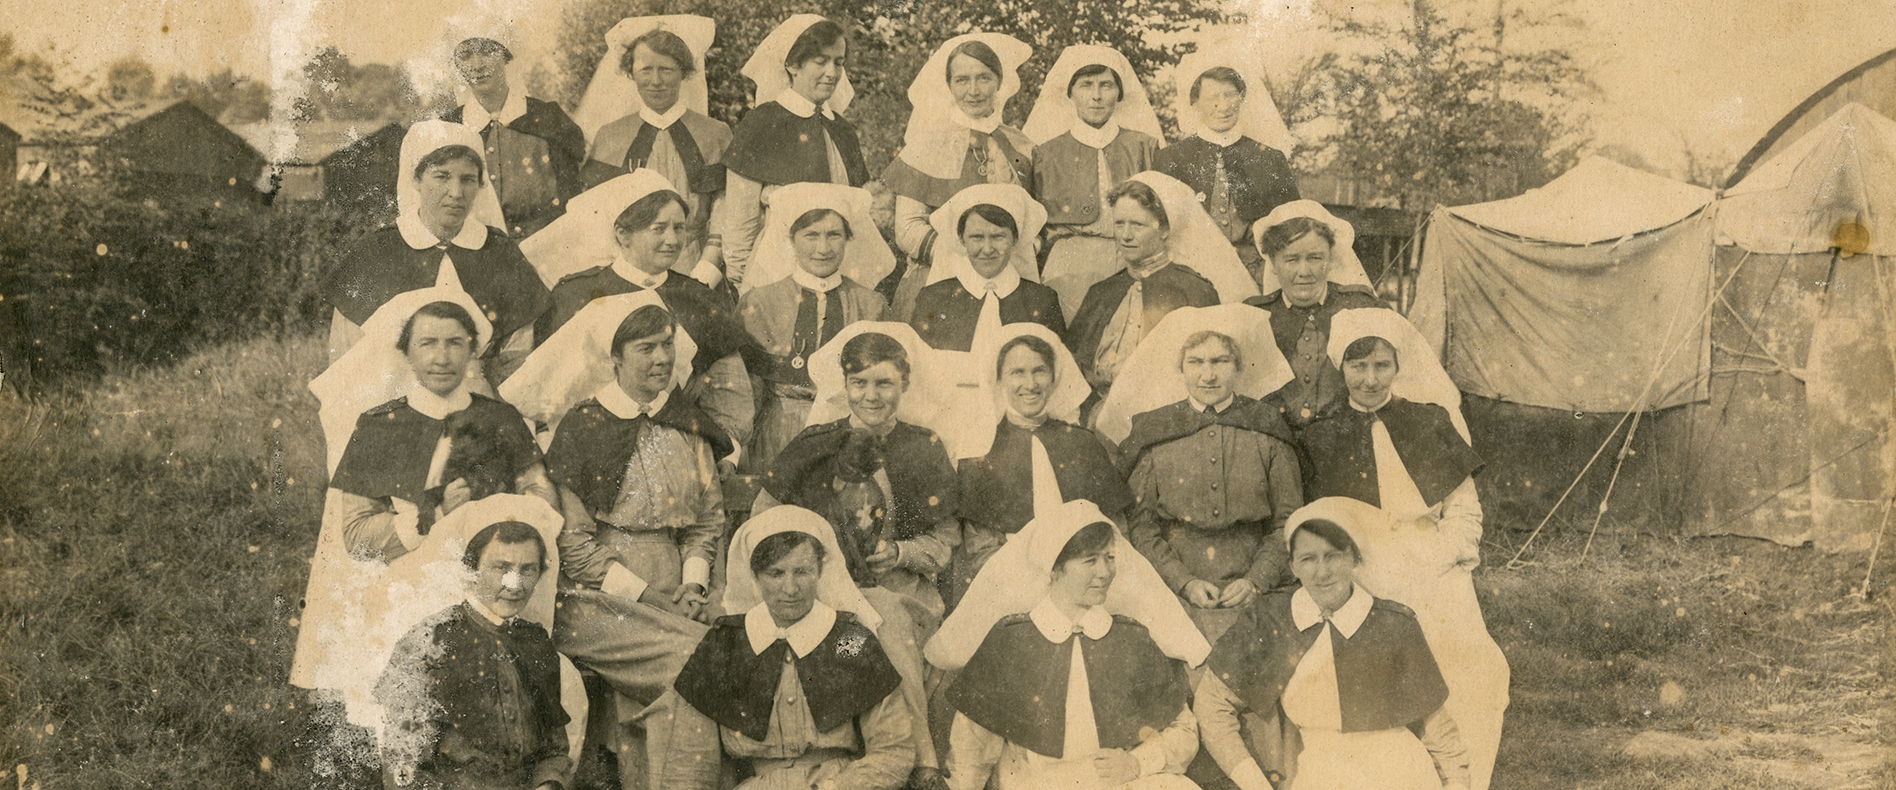 First World War nurses pose for a photograph